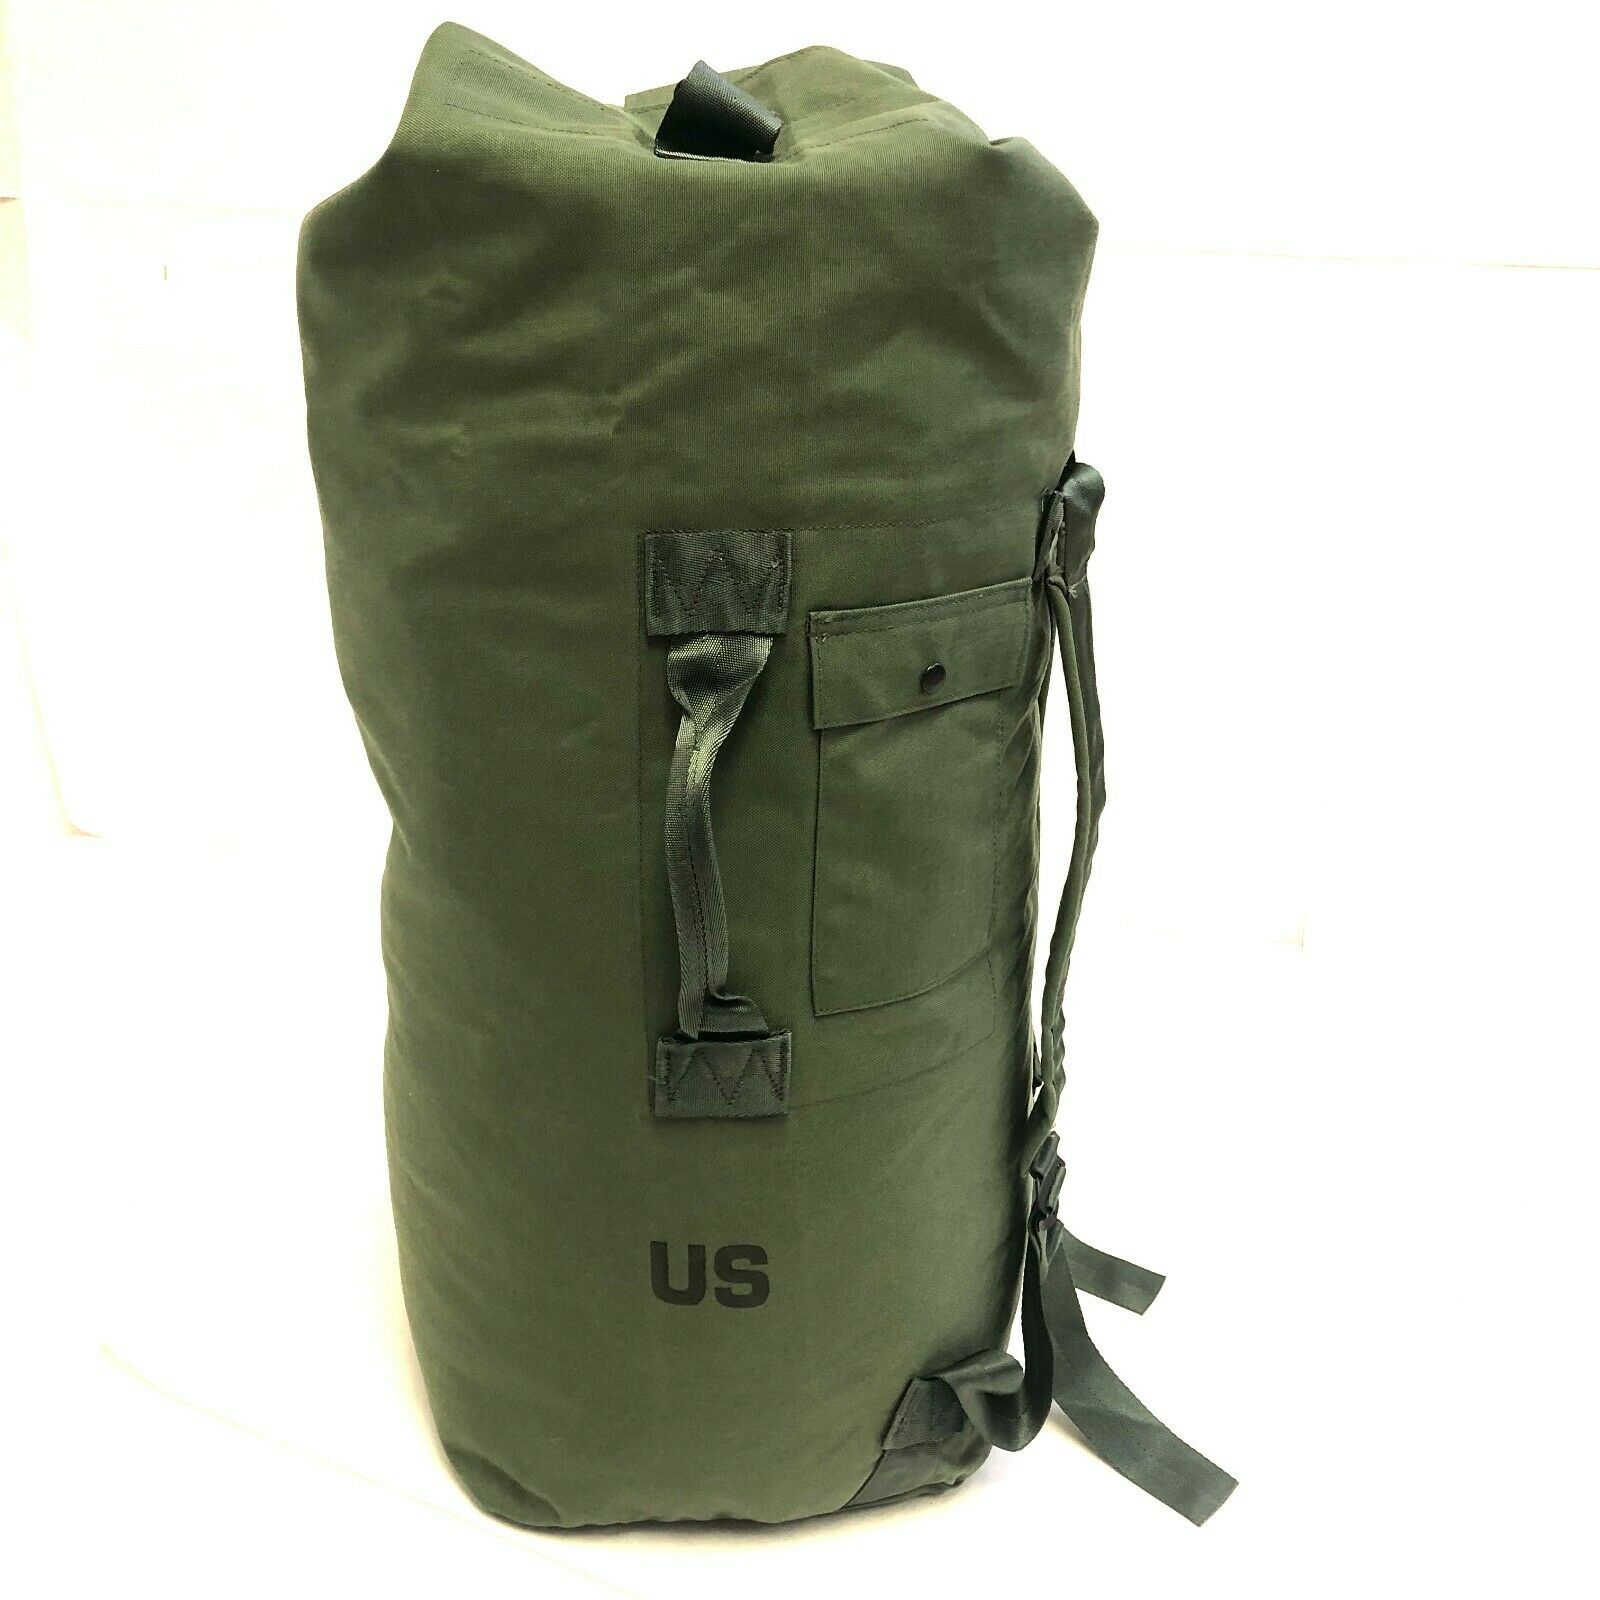 Marine Corps Issue Sea Bag - Duffel Bag